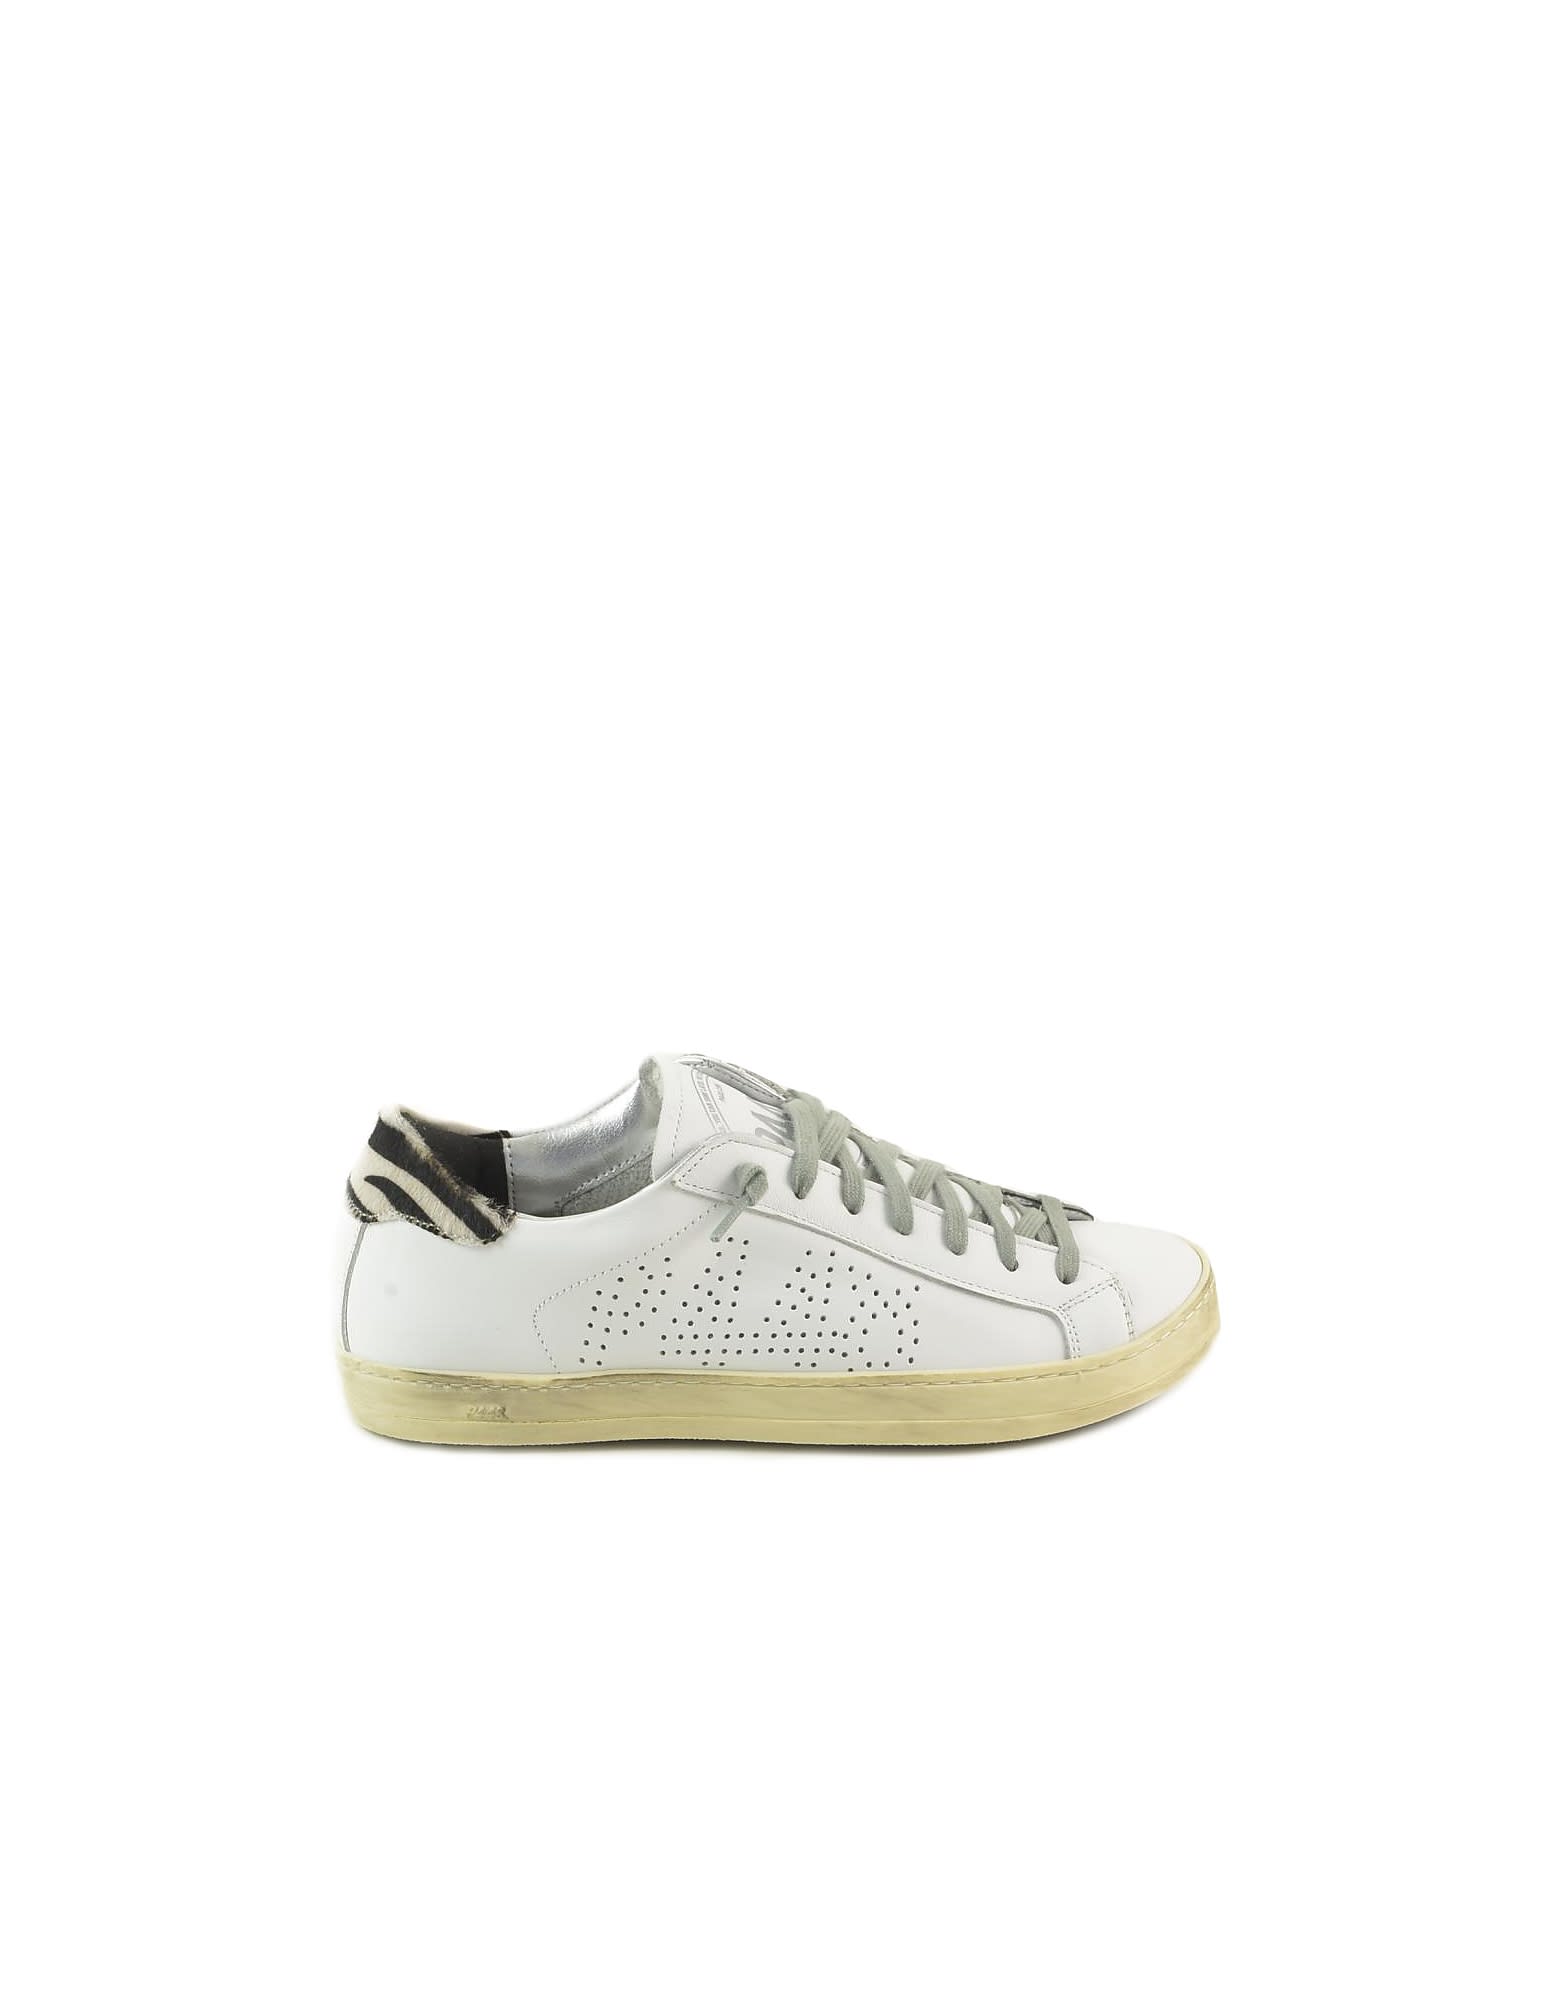 P448 White/zebra Print Leather Womens Flat Sneakers